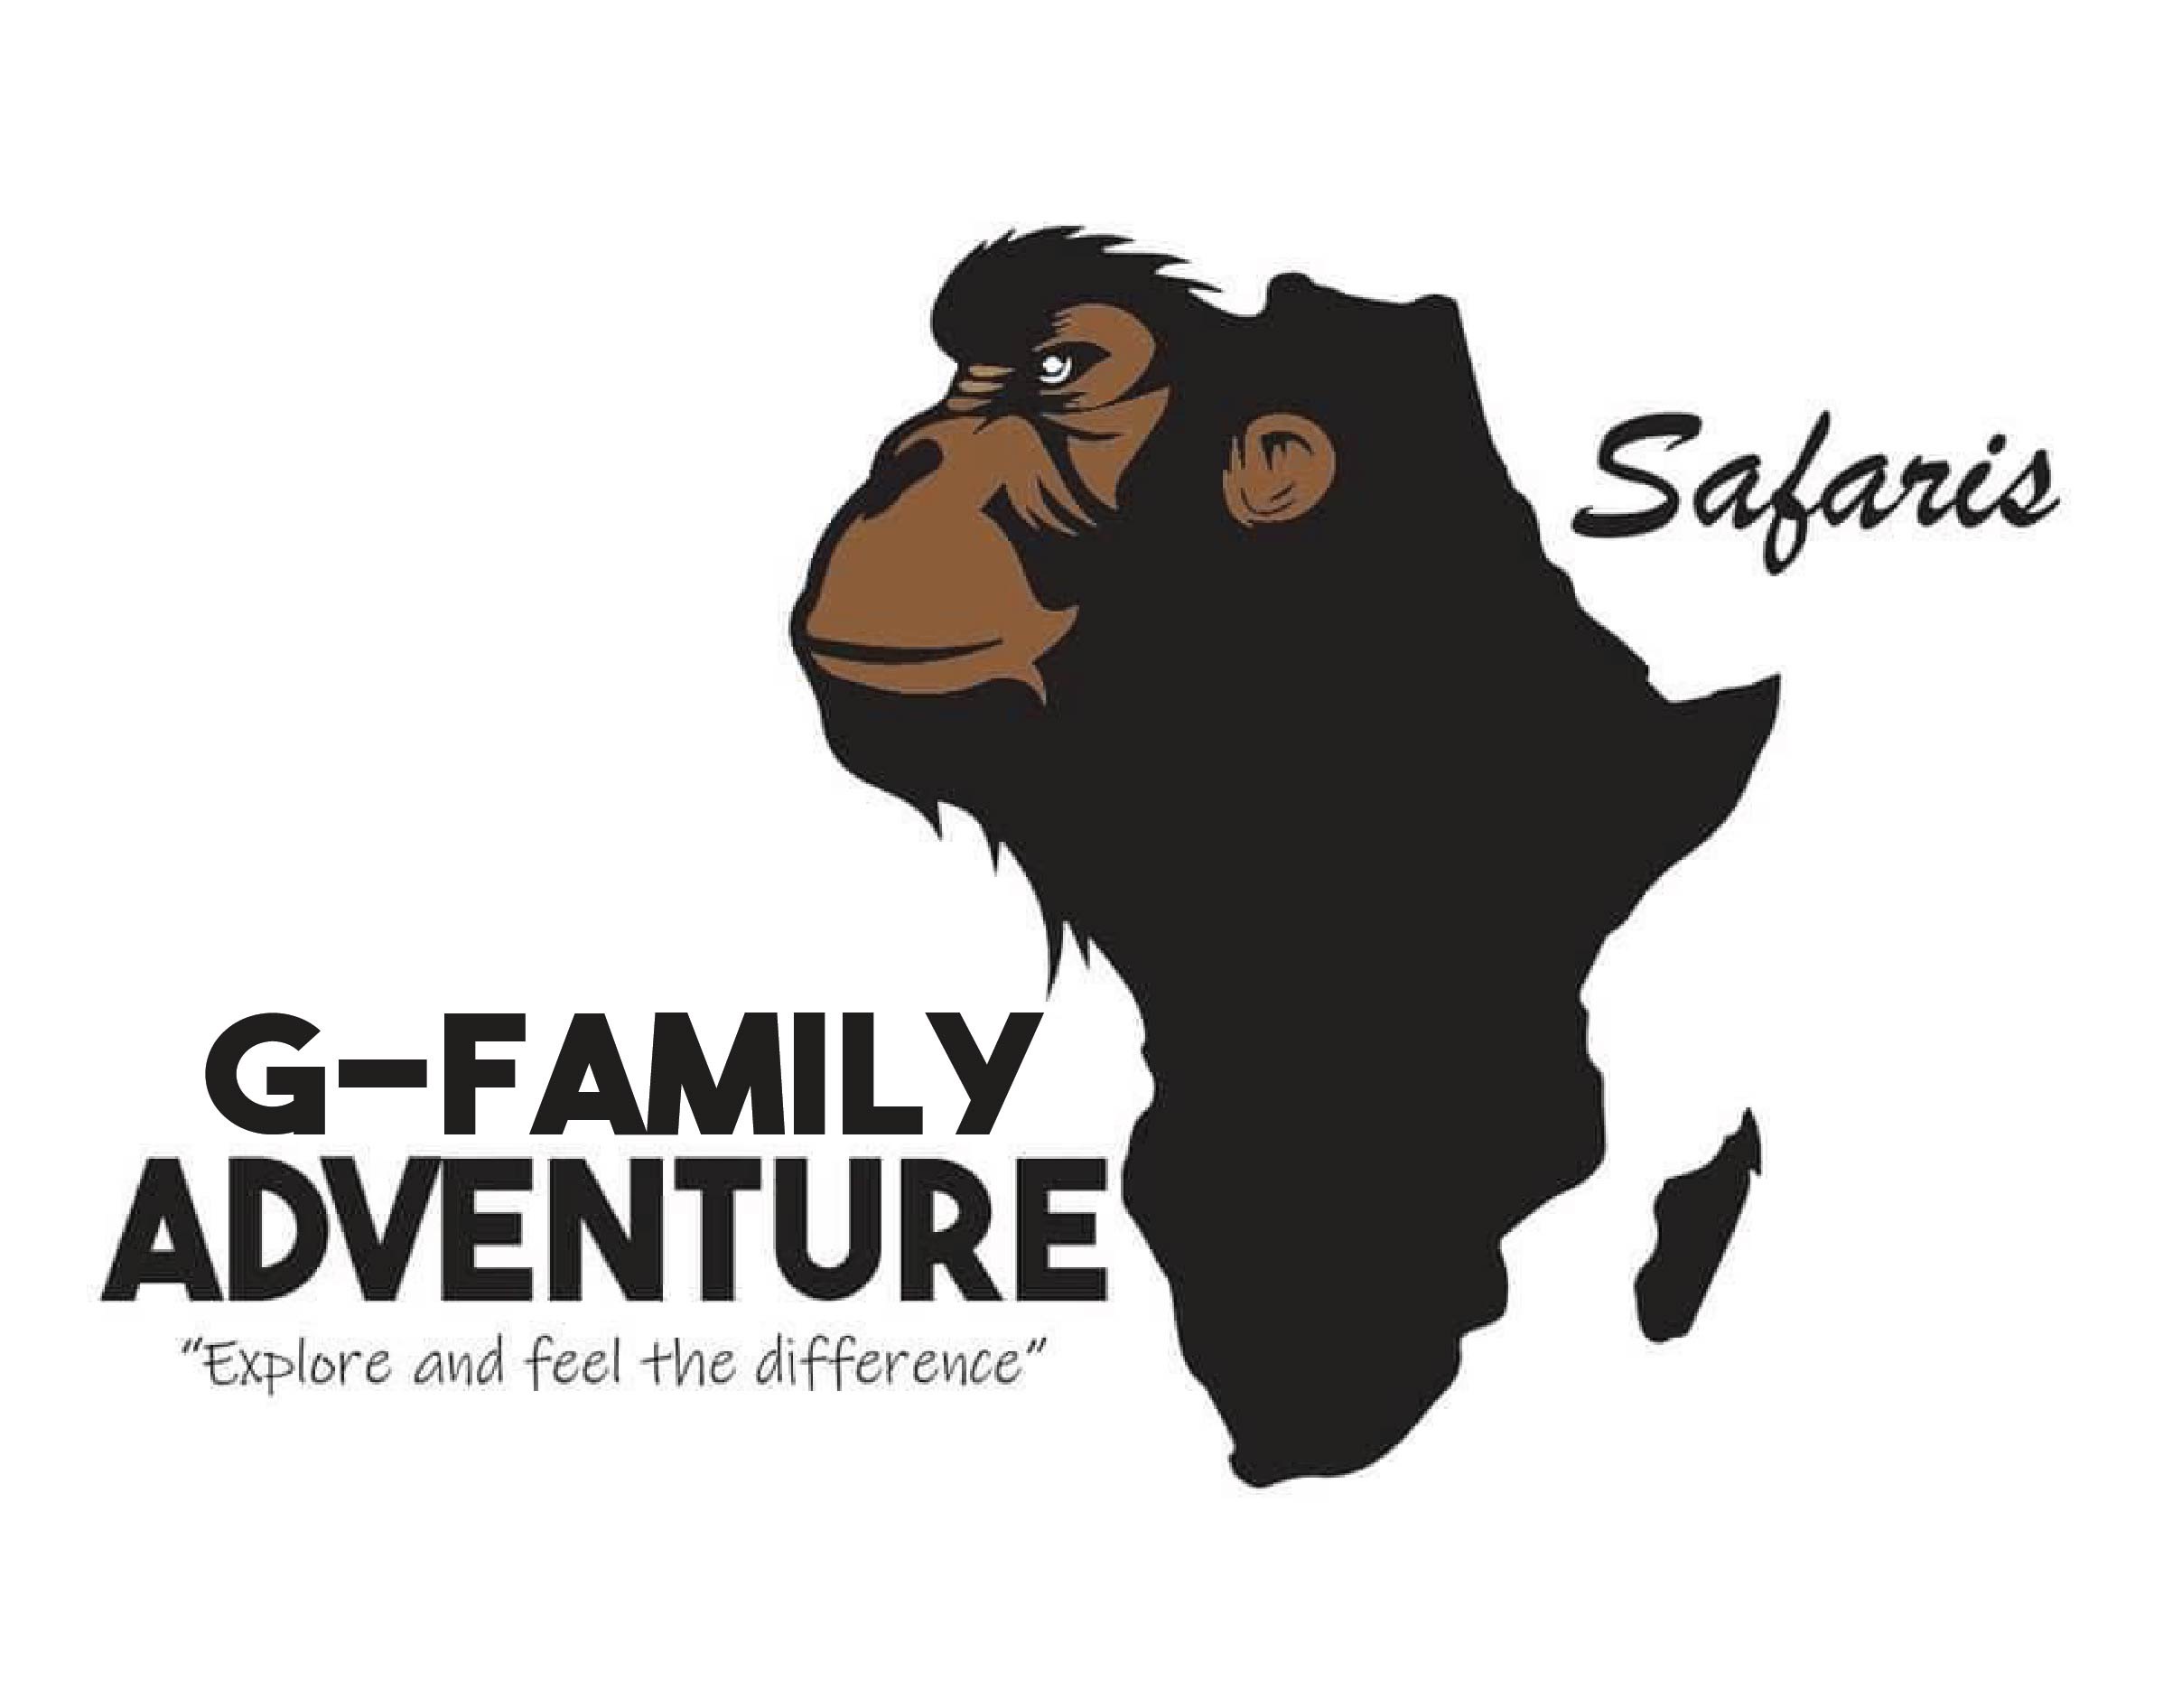 G-family adventures safaris